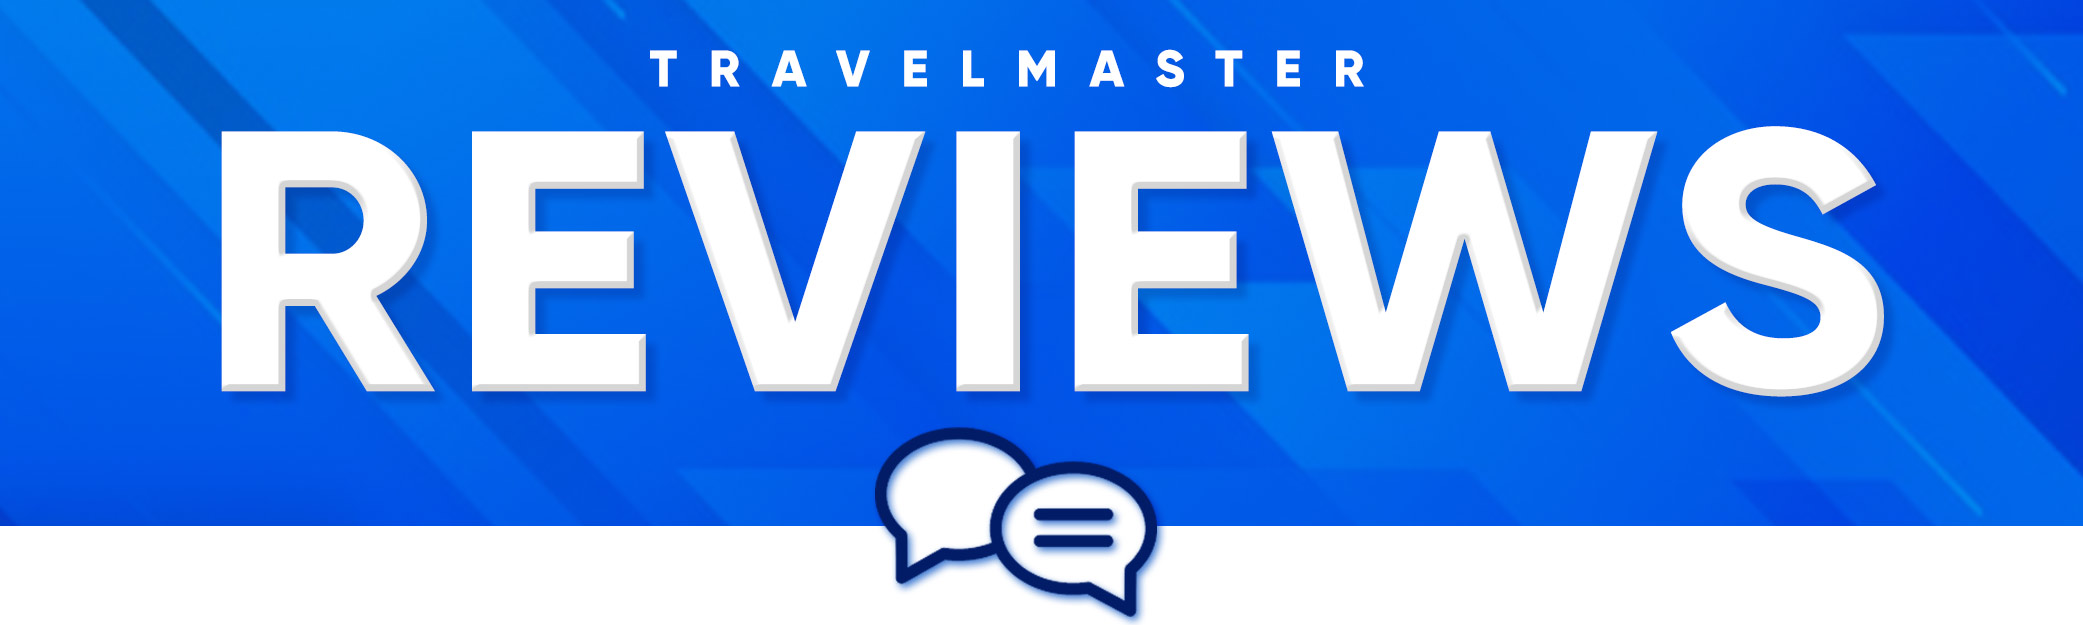 travel master website